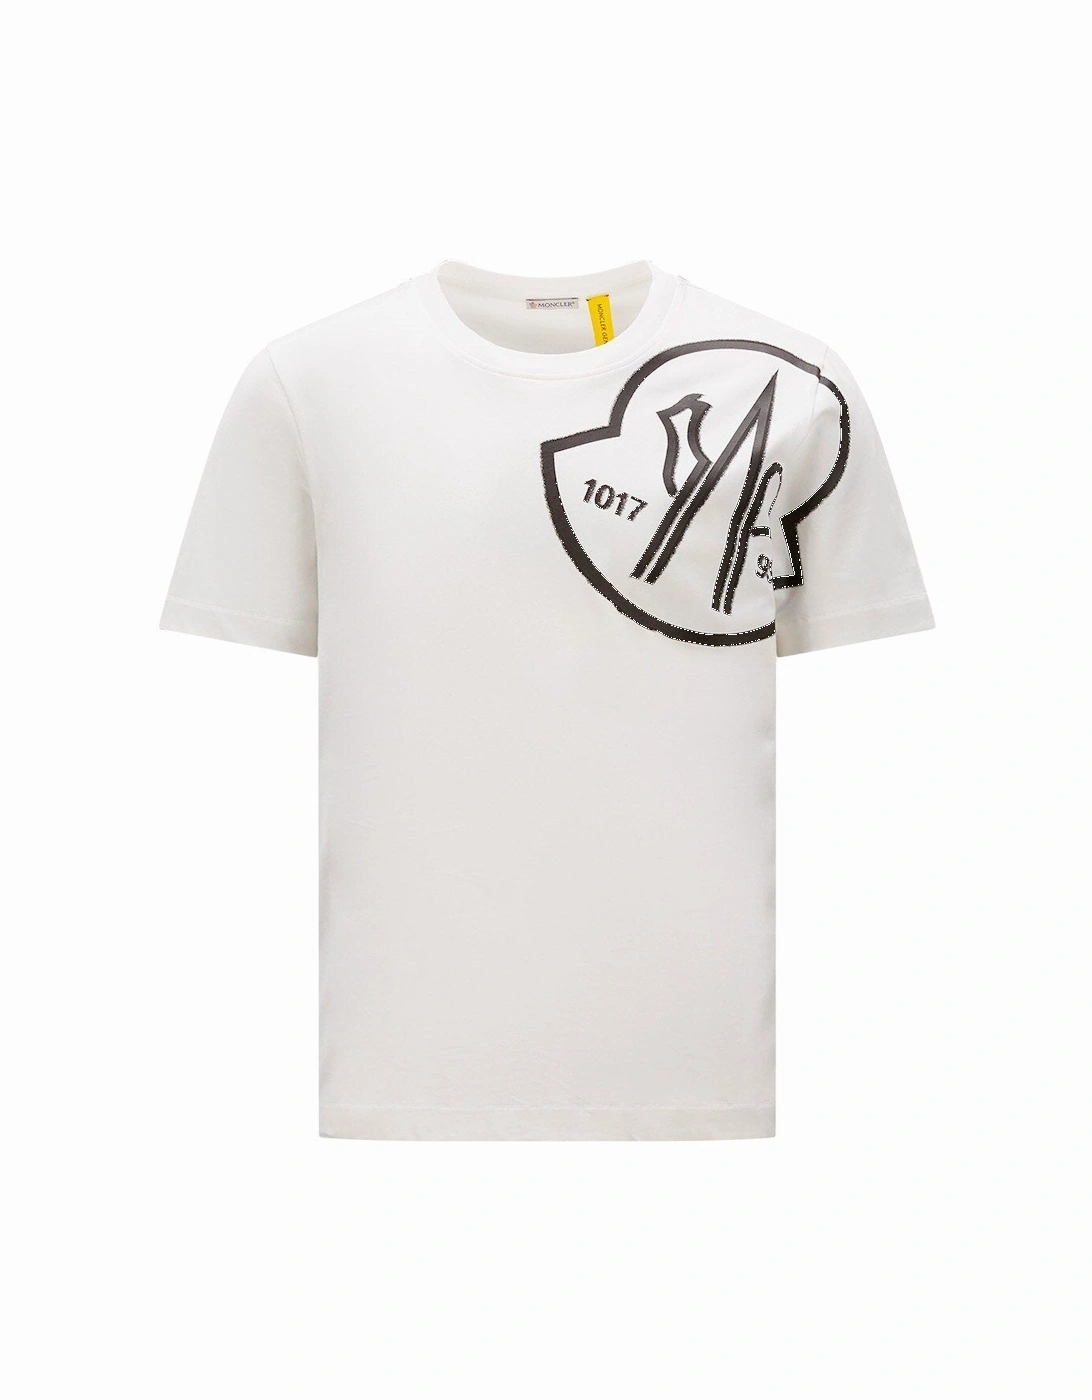 Genius 6 1017 ALYX 9SM T-shirt in White, 2 of 1